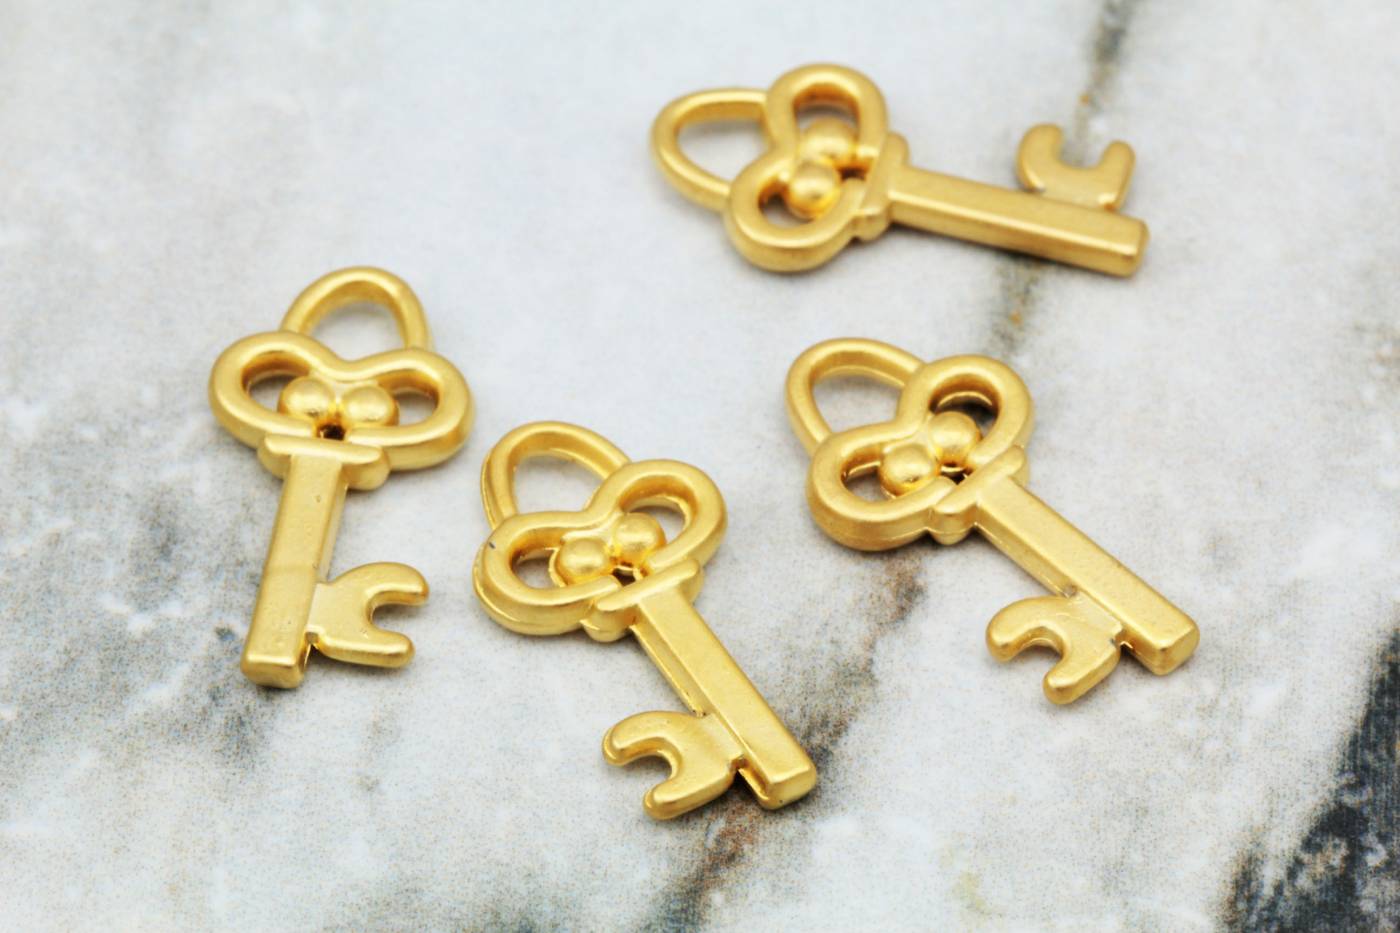 gold-small-metal-key-pendant-charms